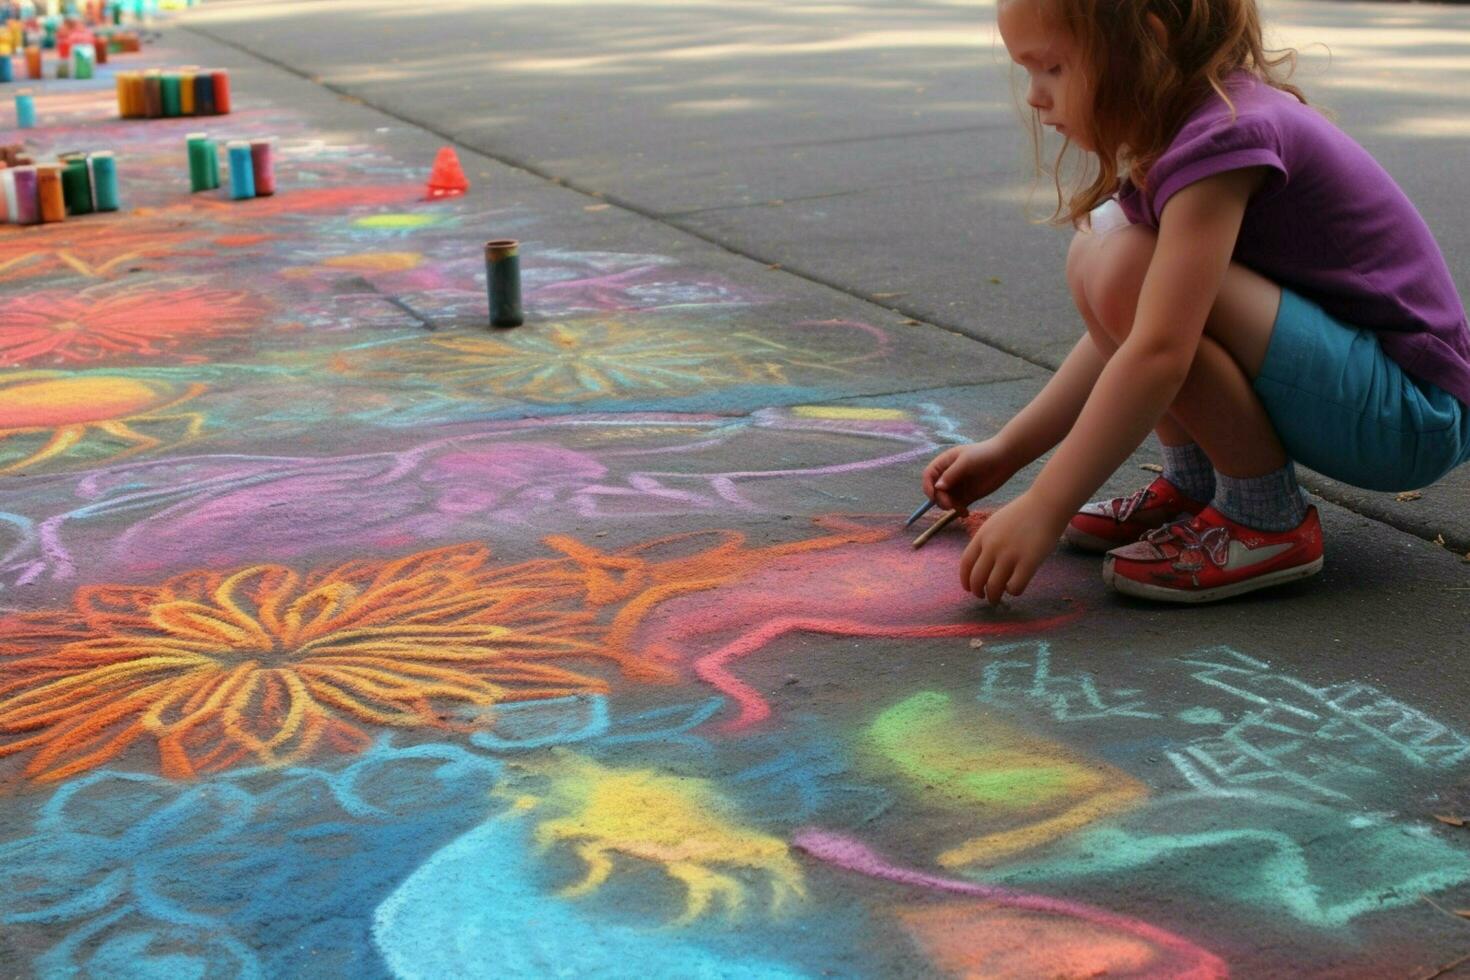 Drawing with sidewalk chalk photo